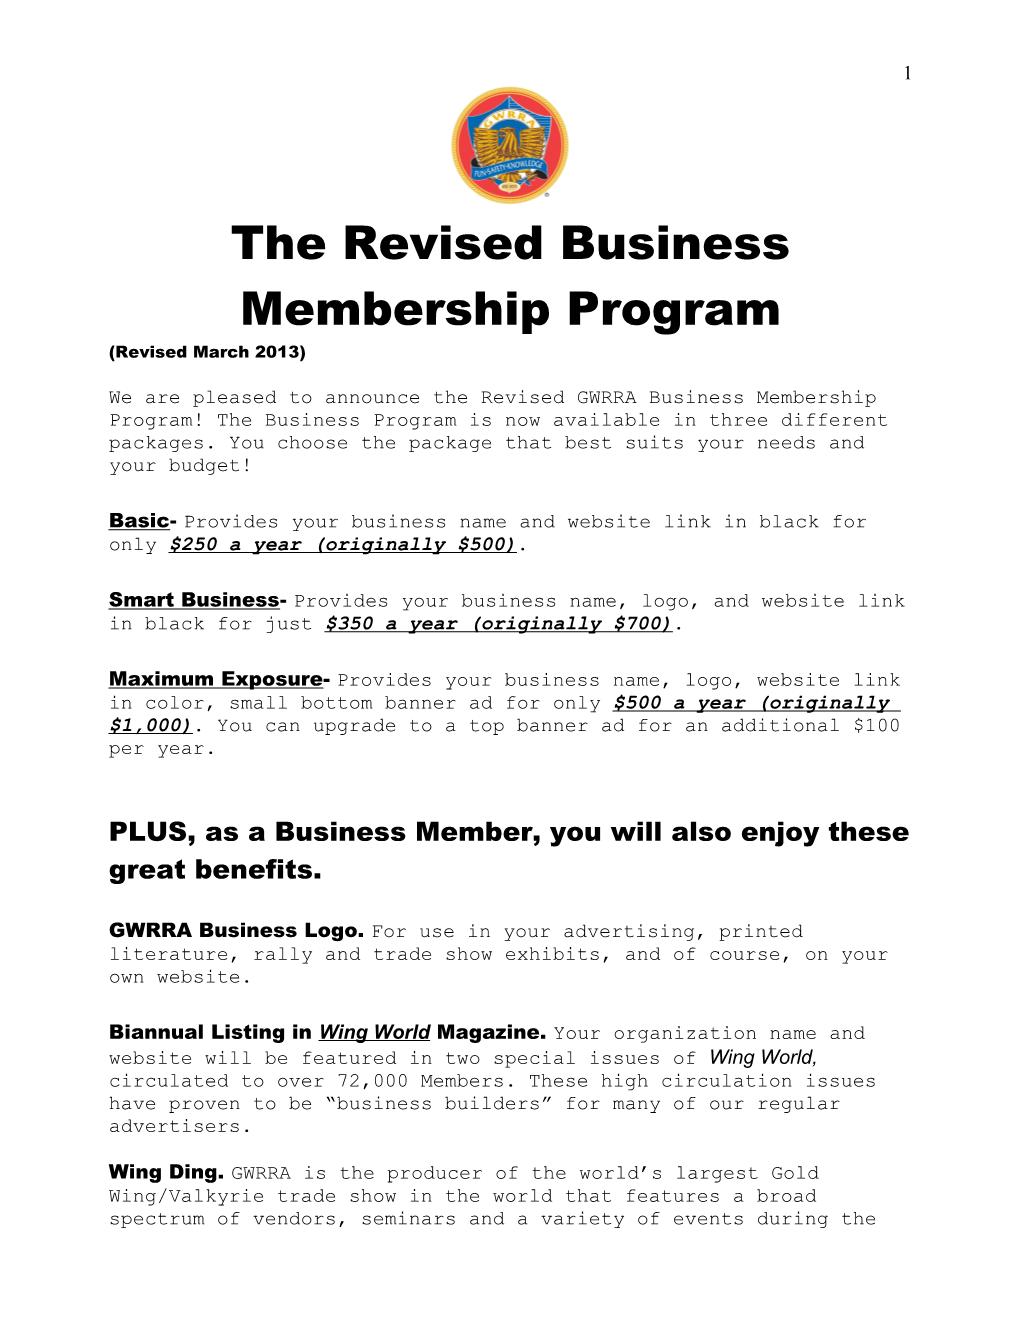 The Revised Business Membership Program